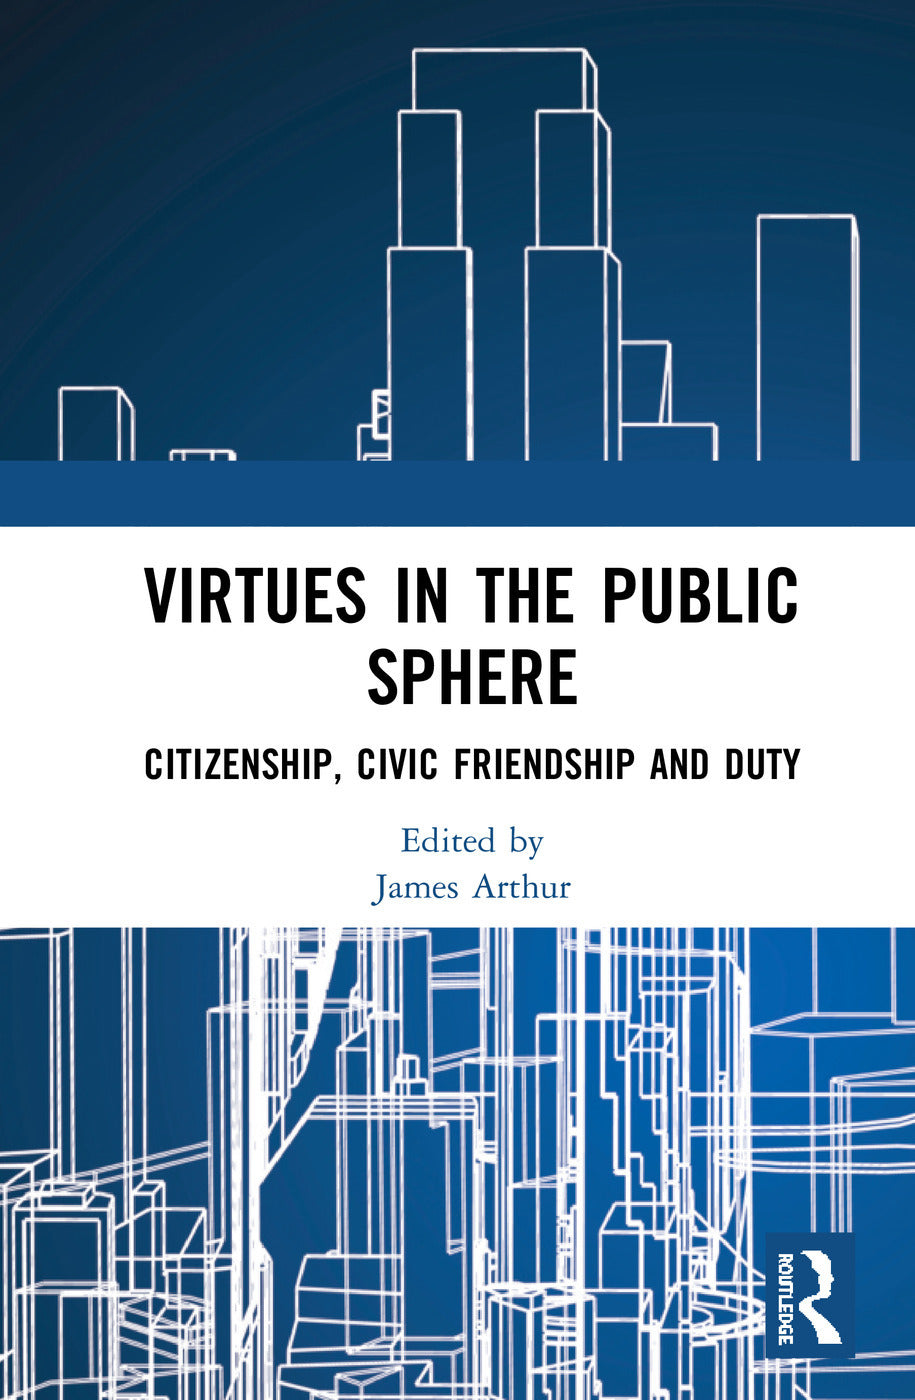 Virtues in the Public Sphere : Citizenship, Civic Friendship and Duty ร้านหนังสือและสิ่งของ เป็นร้านหนังสือภาษาอังกฤษหายาก และร้านกาแฟ หรือ บุ๊คคาเฟ่ ตั้งอยู่สุขุมวิท กรุงเทพ